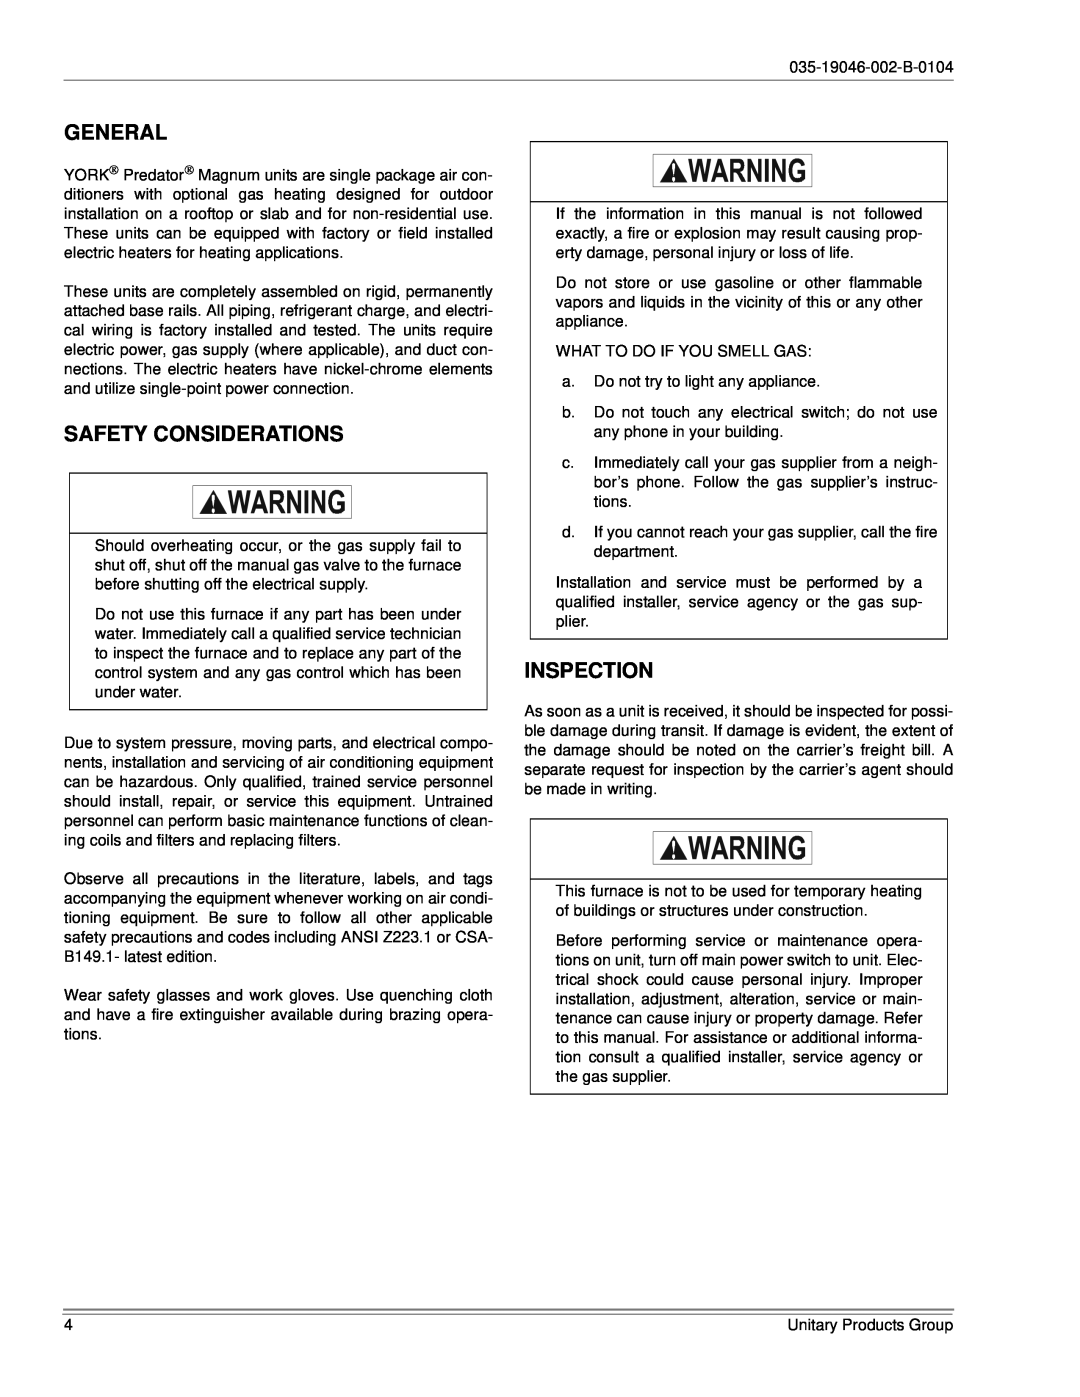 York DJ150 installation manual General, Safety Considerations, Inspection 